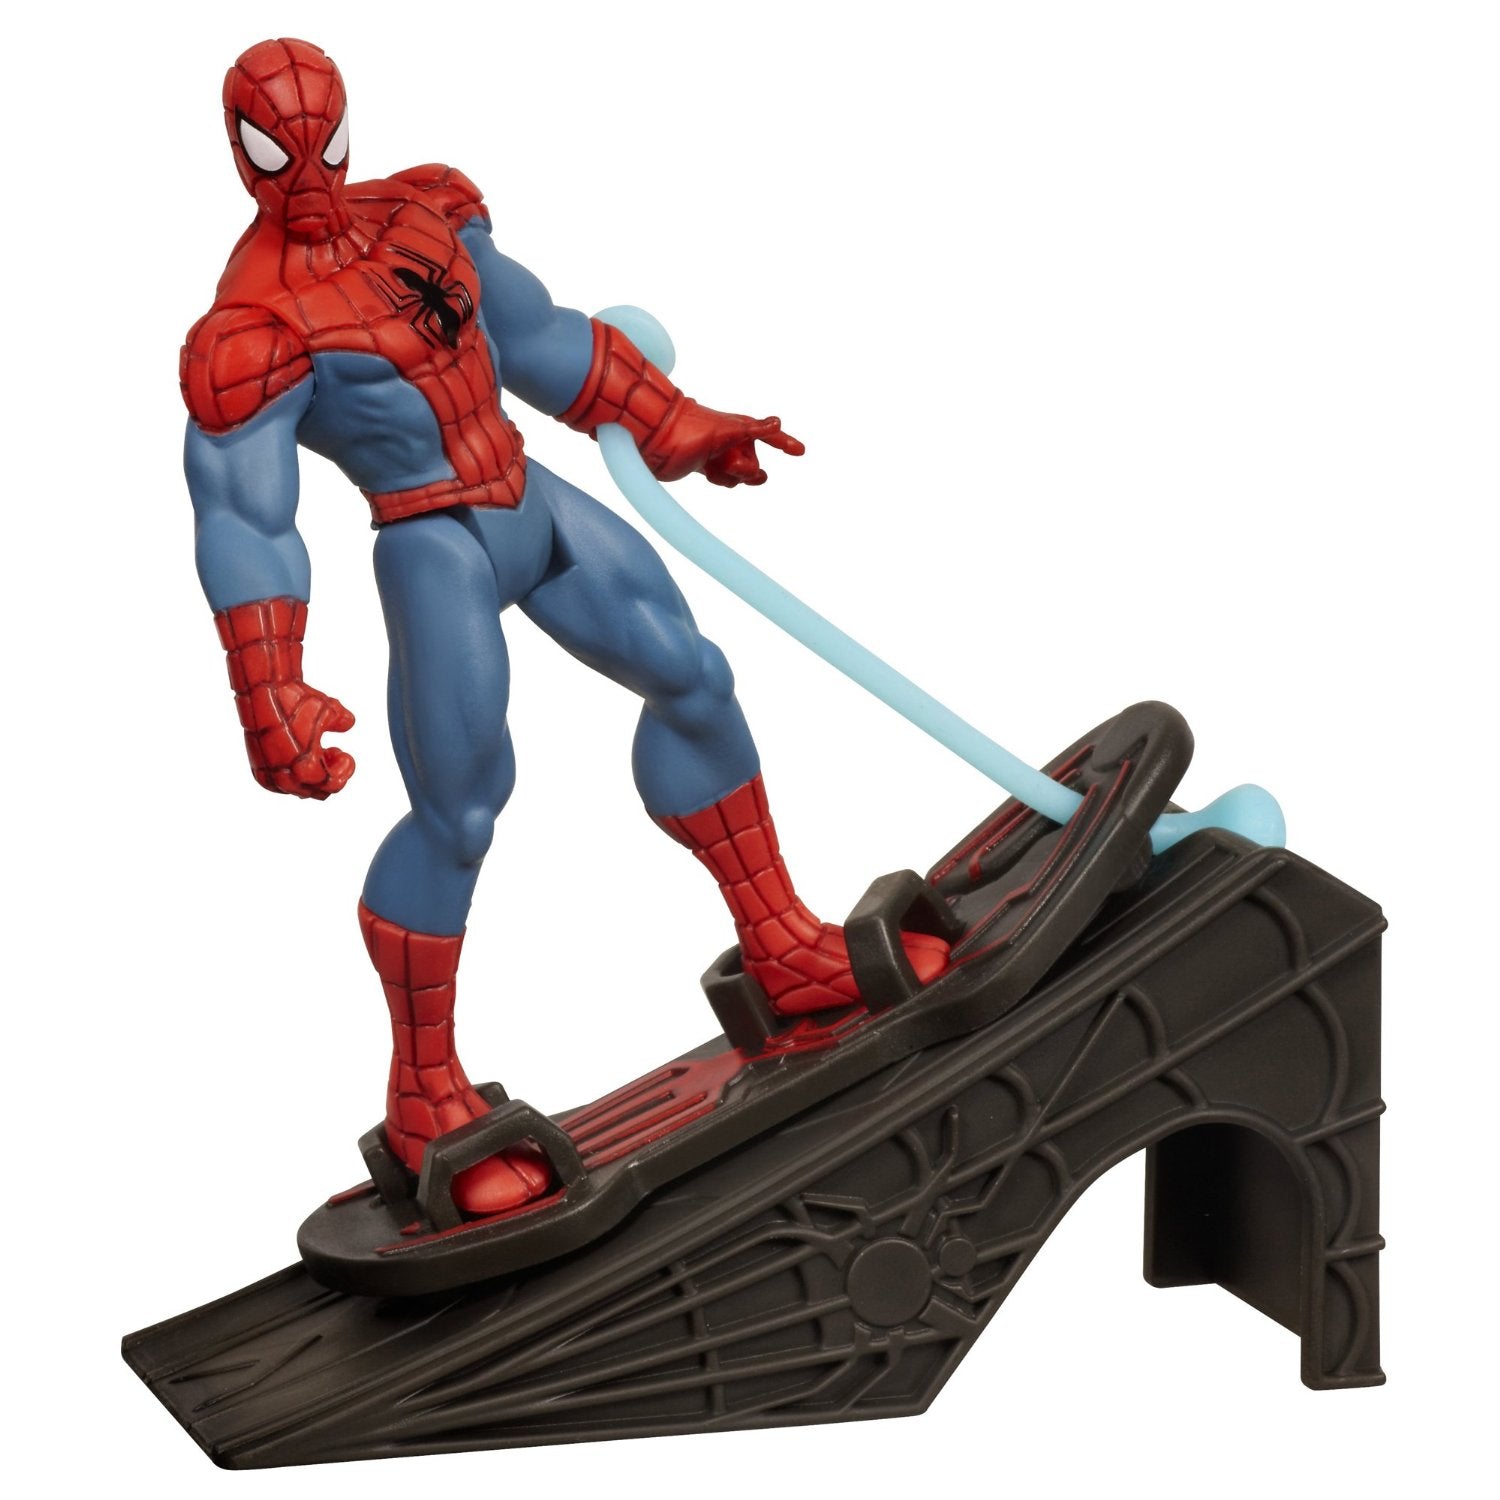 Spider-Man Toys - Rocket Ramp Action Figure